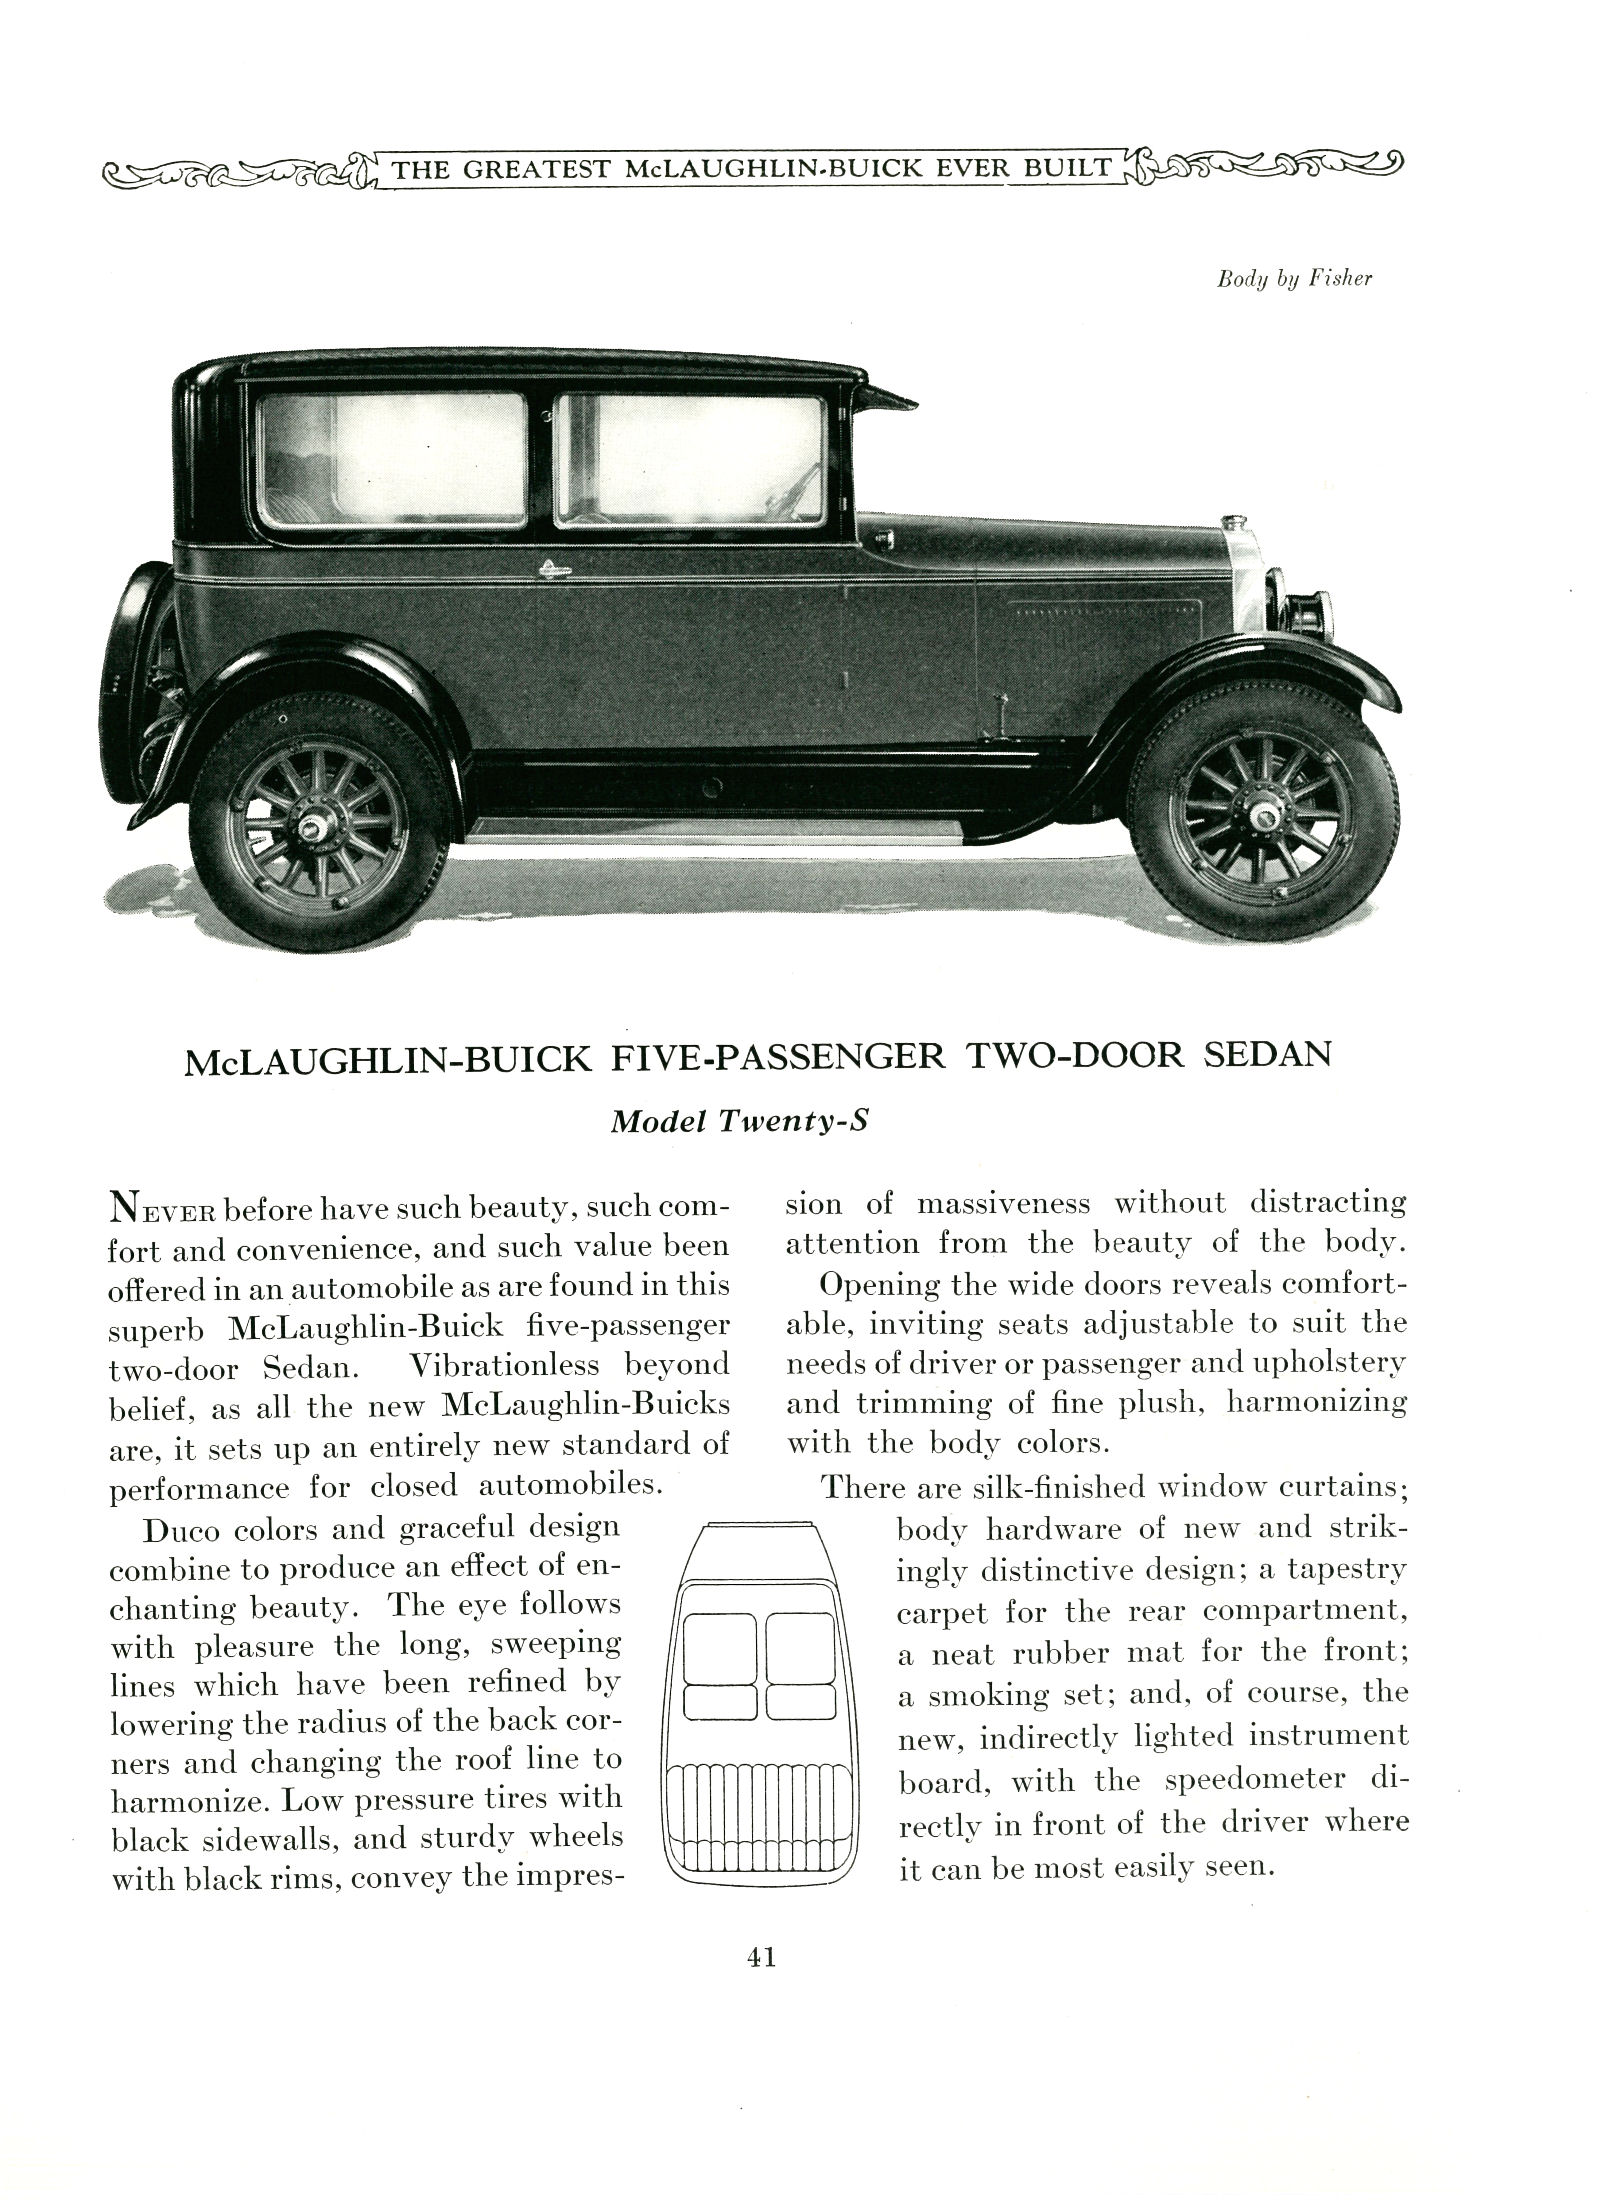 1930 McLaughlin Buick Booklet-41